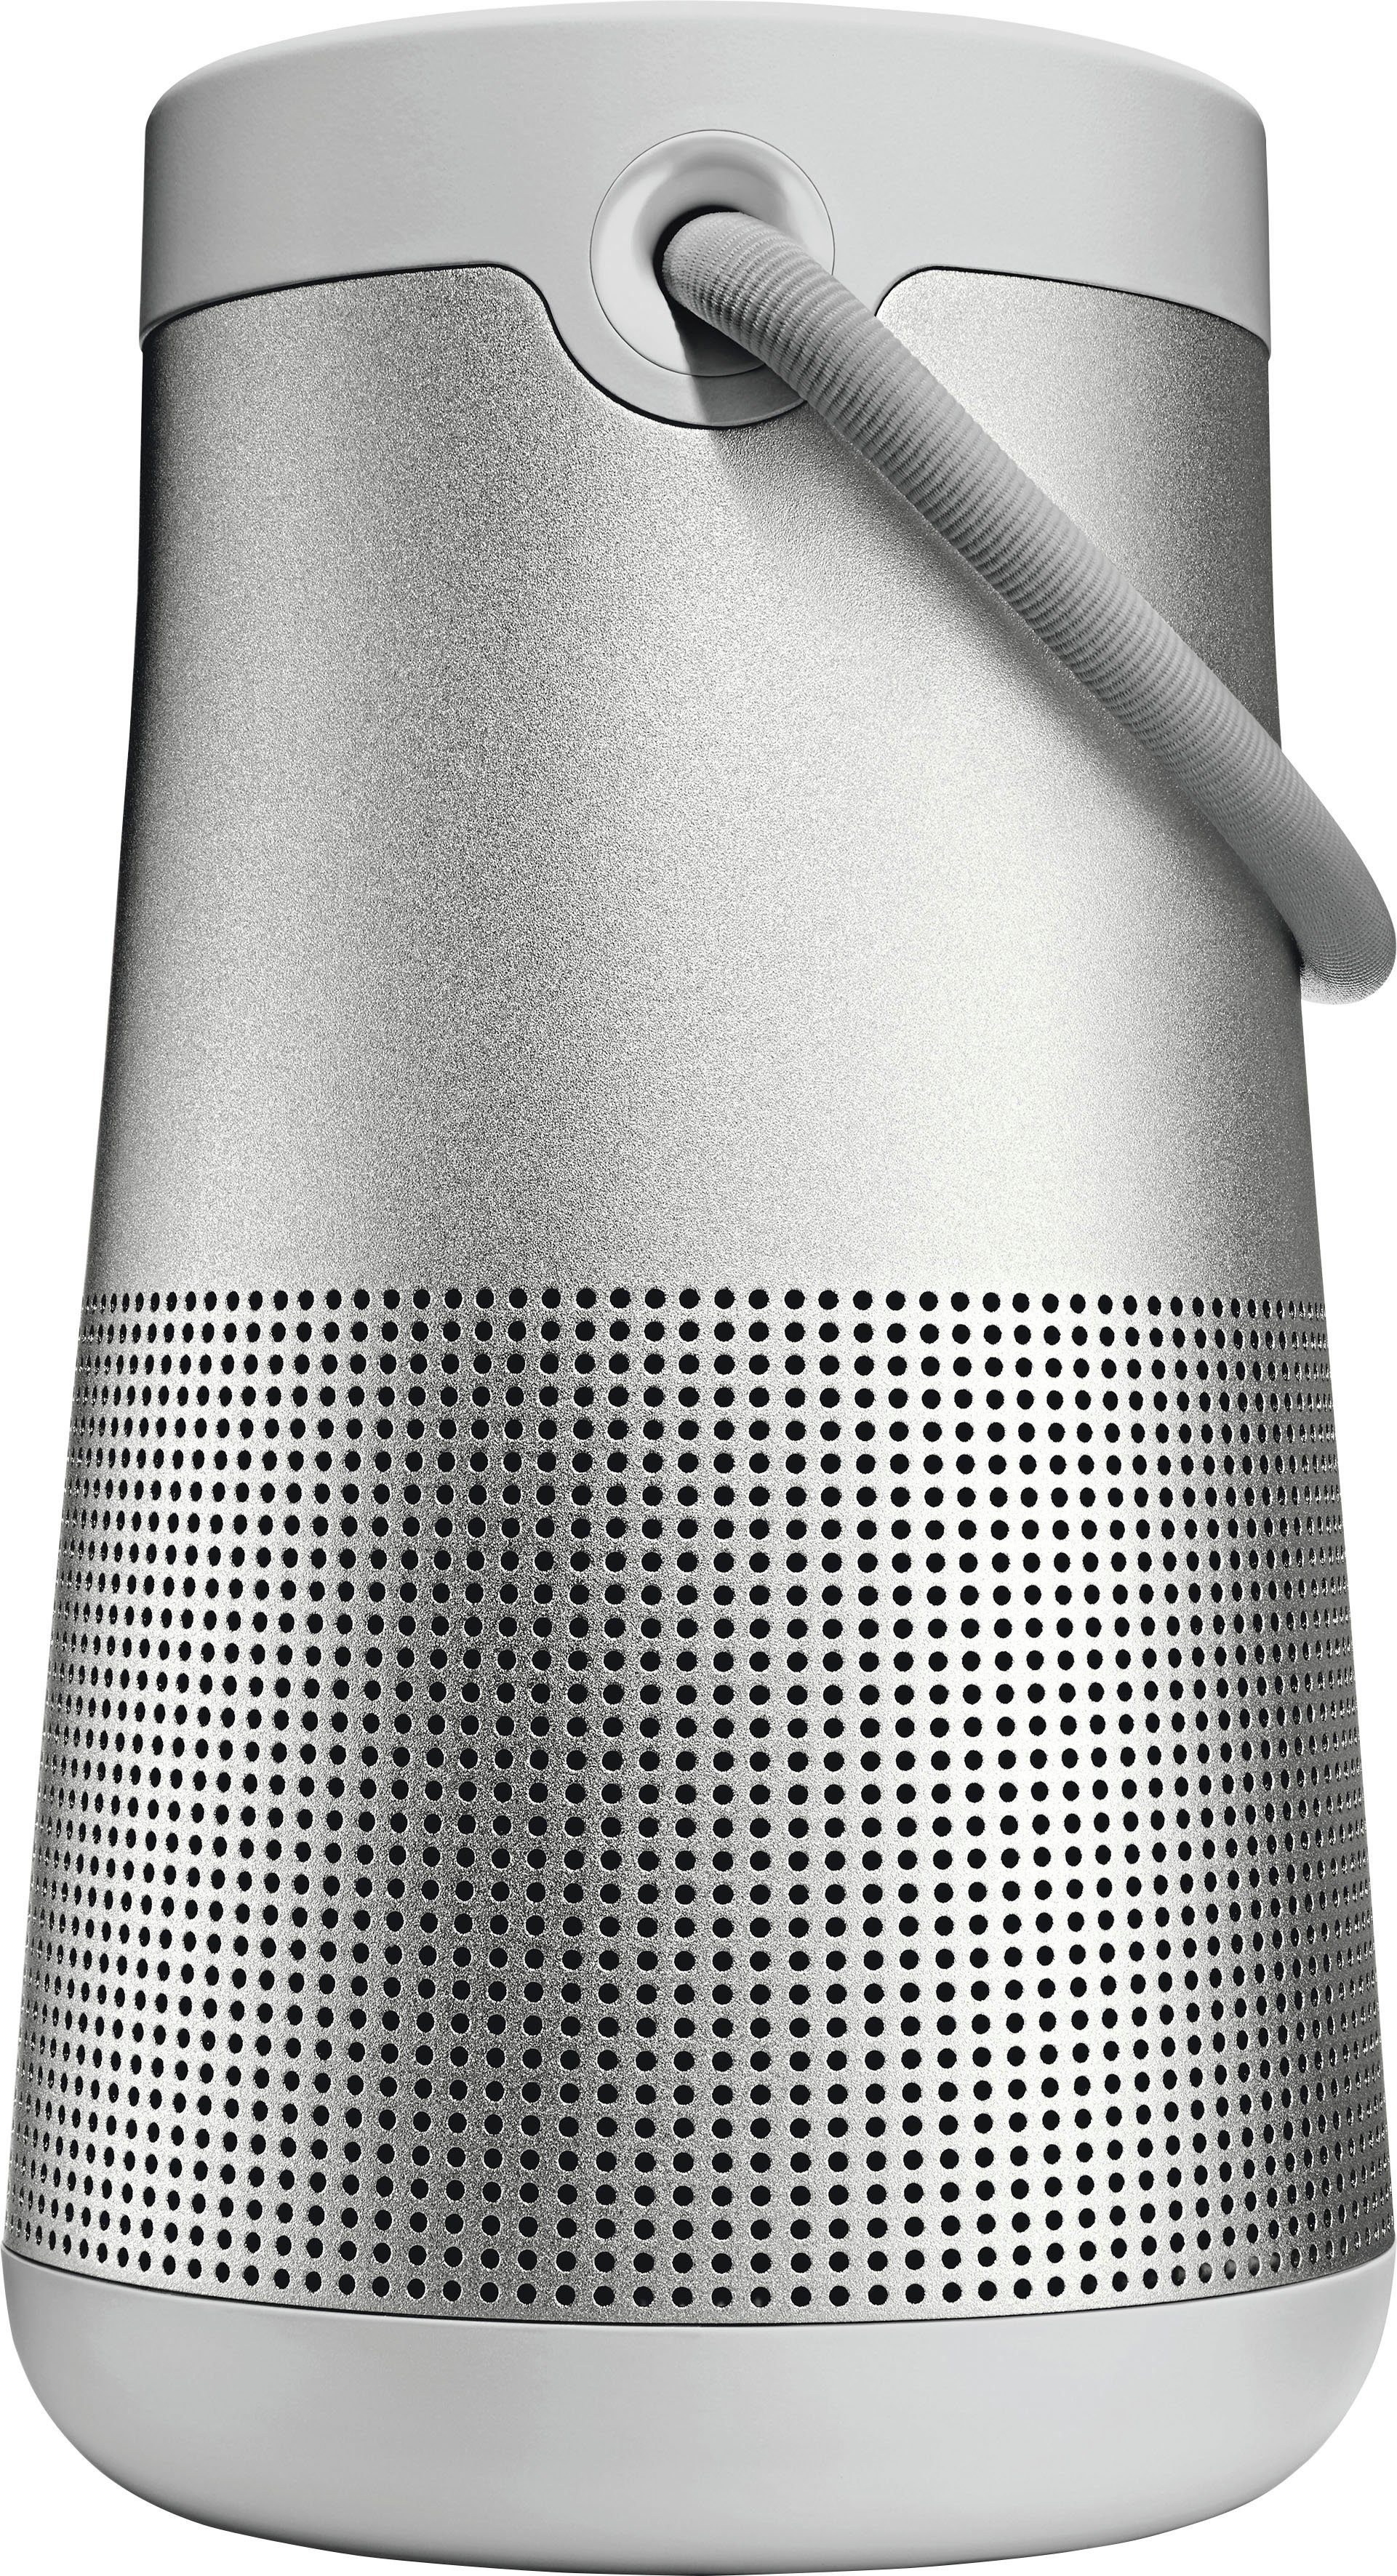 Bose SoundLink Revolve+ II Luxe (Bluetooth) Stereo Bluetooth-Lautsprecher Silver